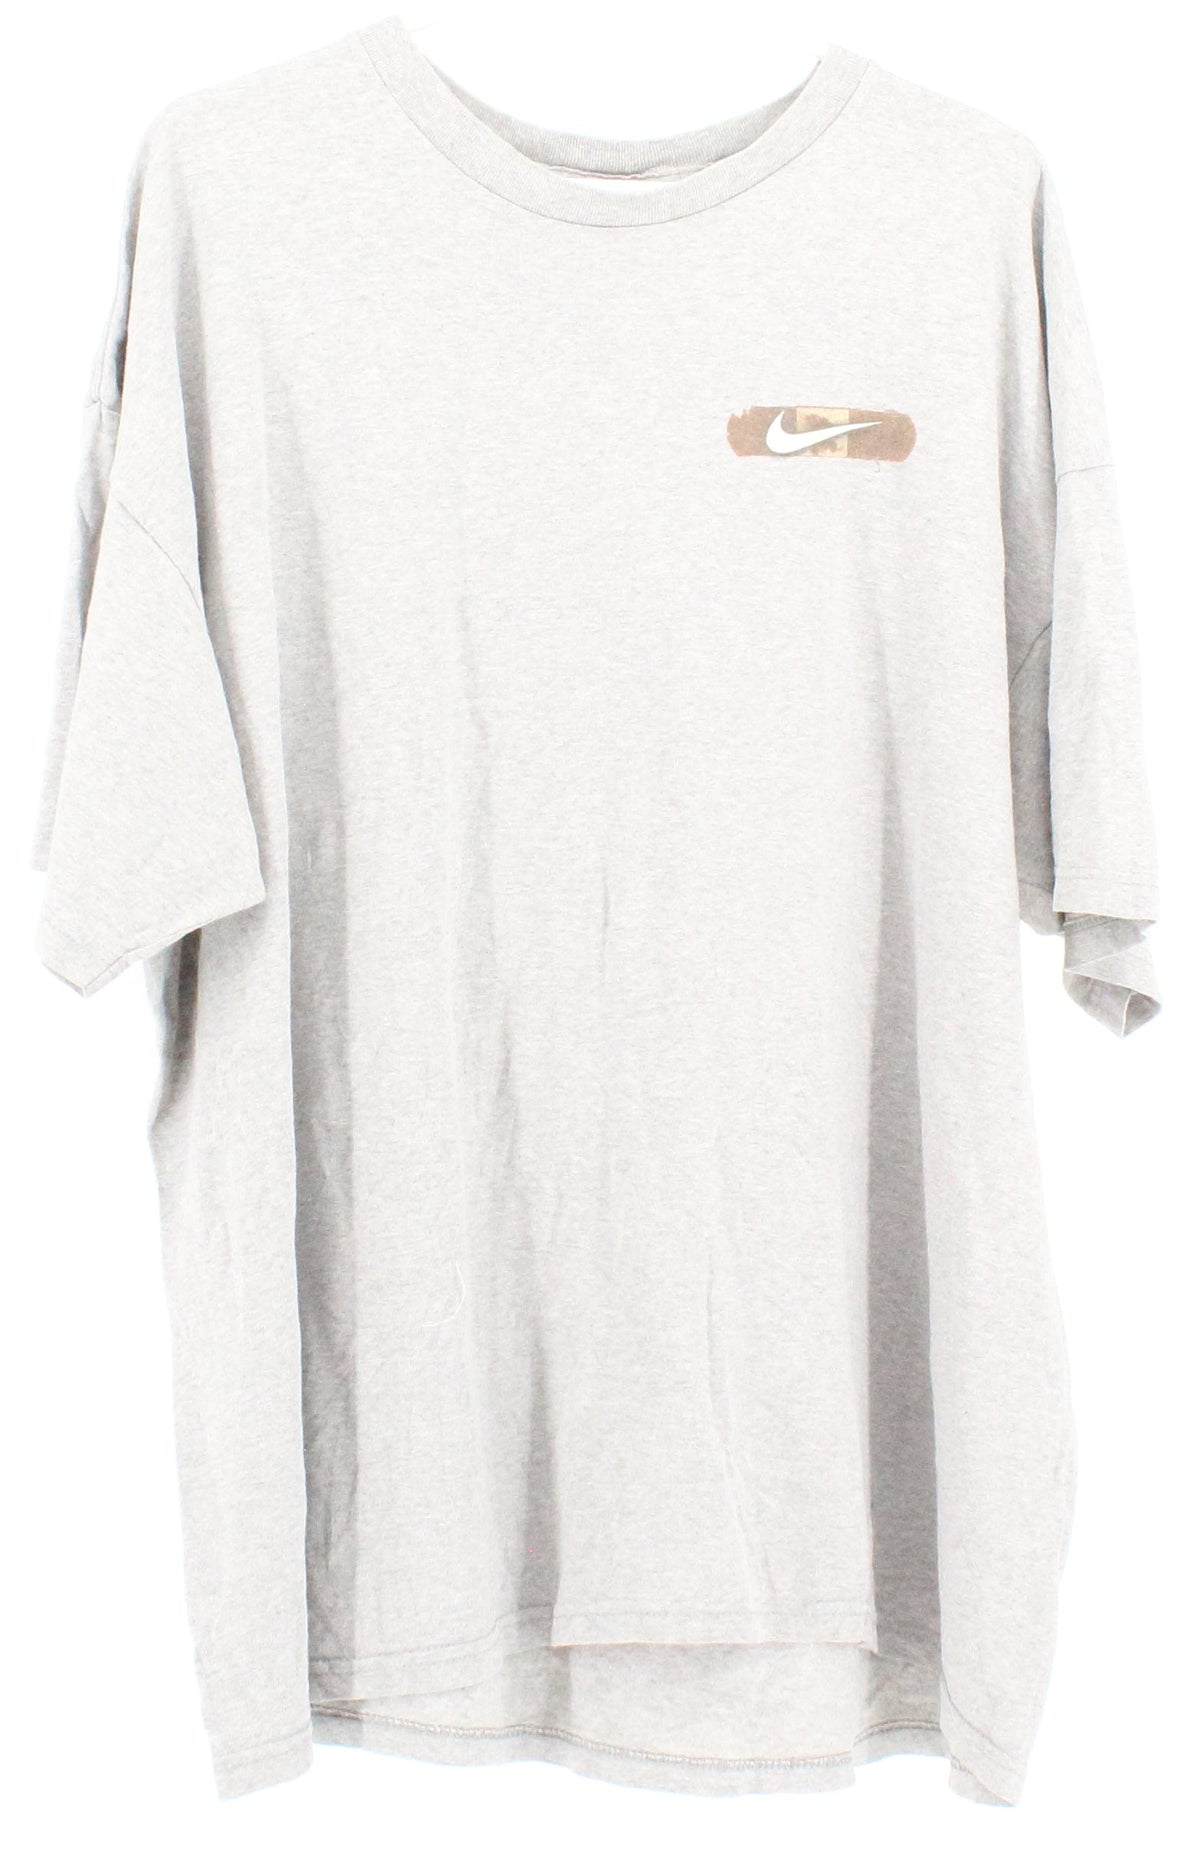 Nike Grey Front Logo "Football Hurts" Back Graphic T-Shirt